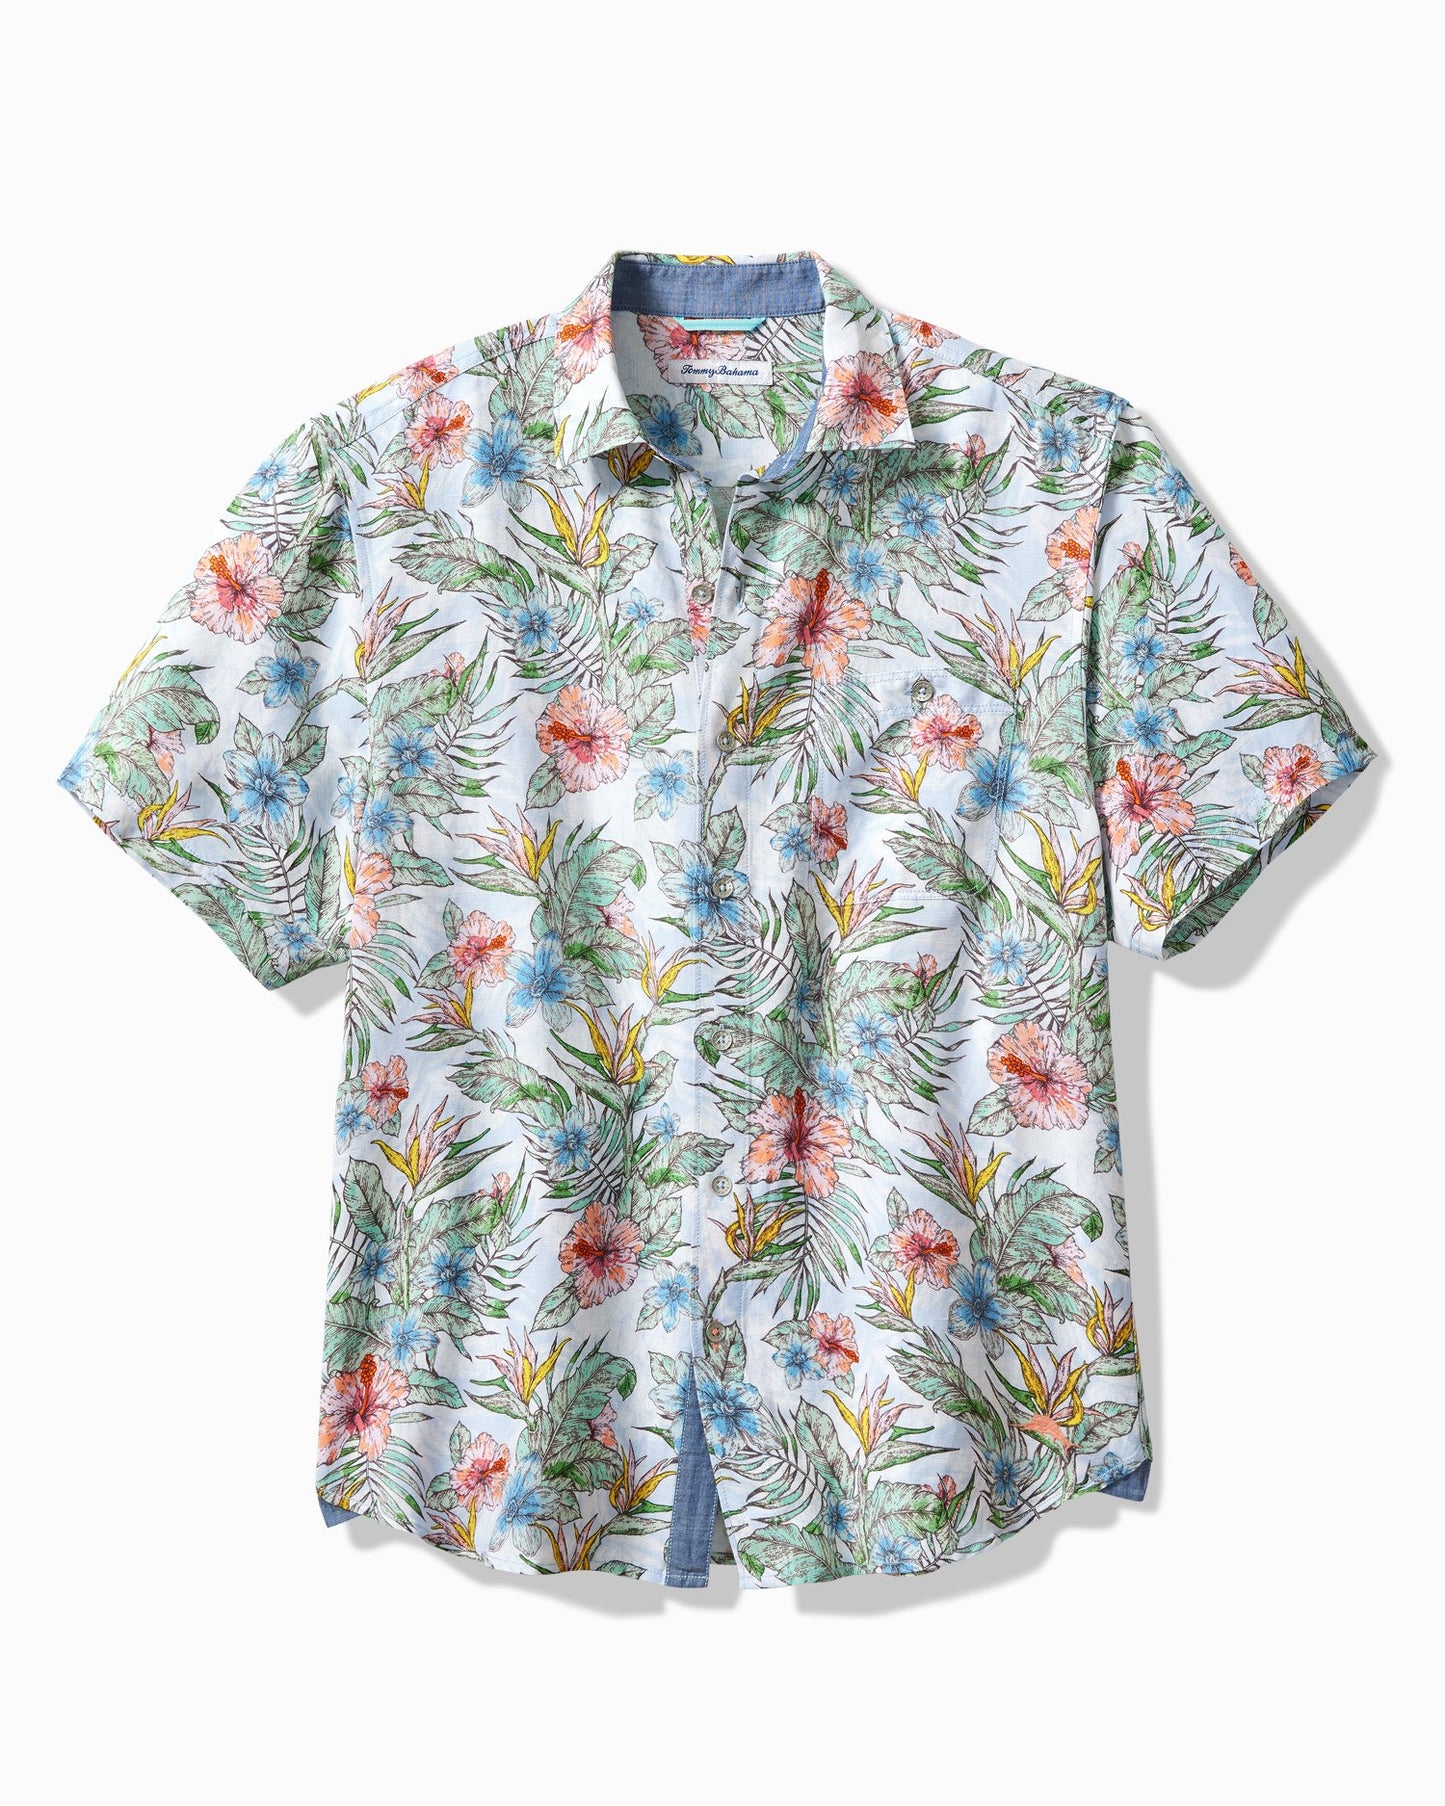 Tommy Bahama Men's Sand Stretch Linen Garden Shirt